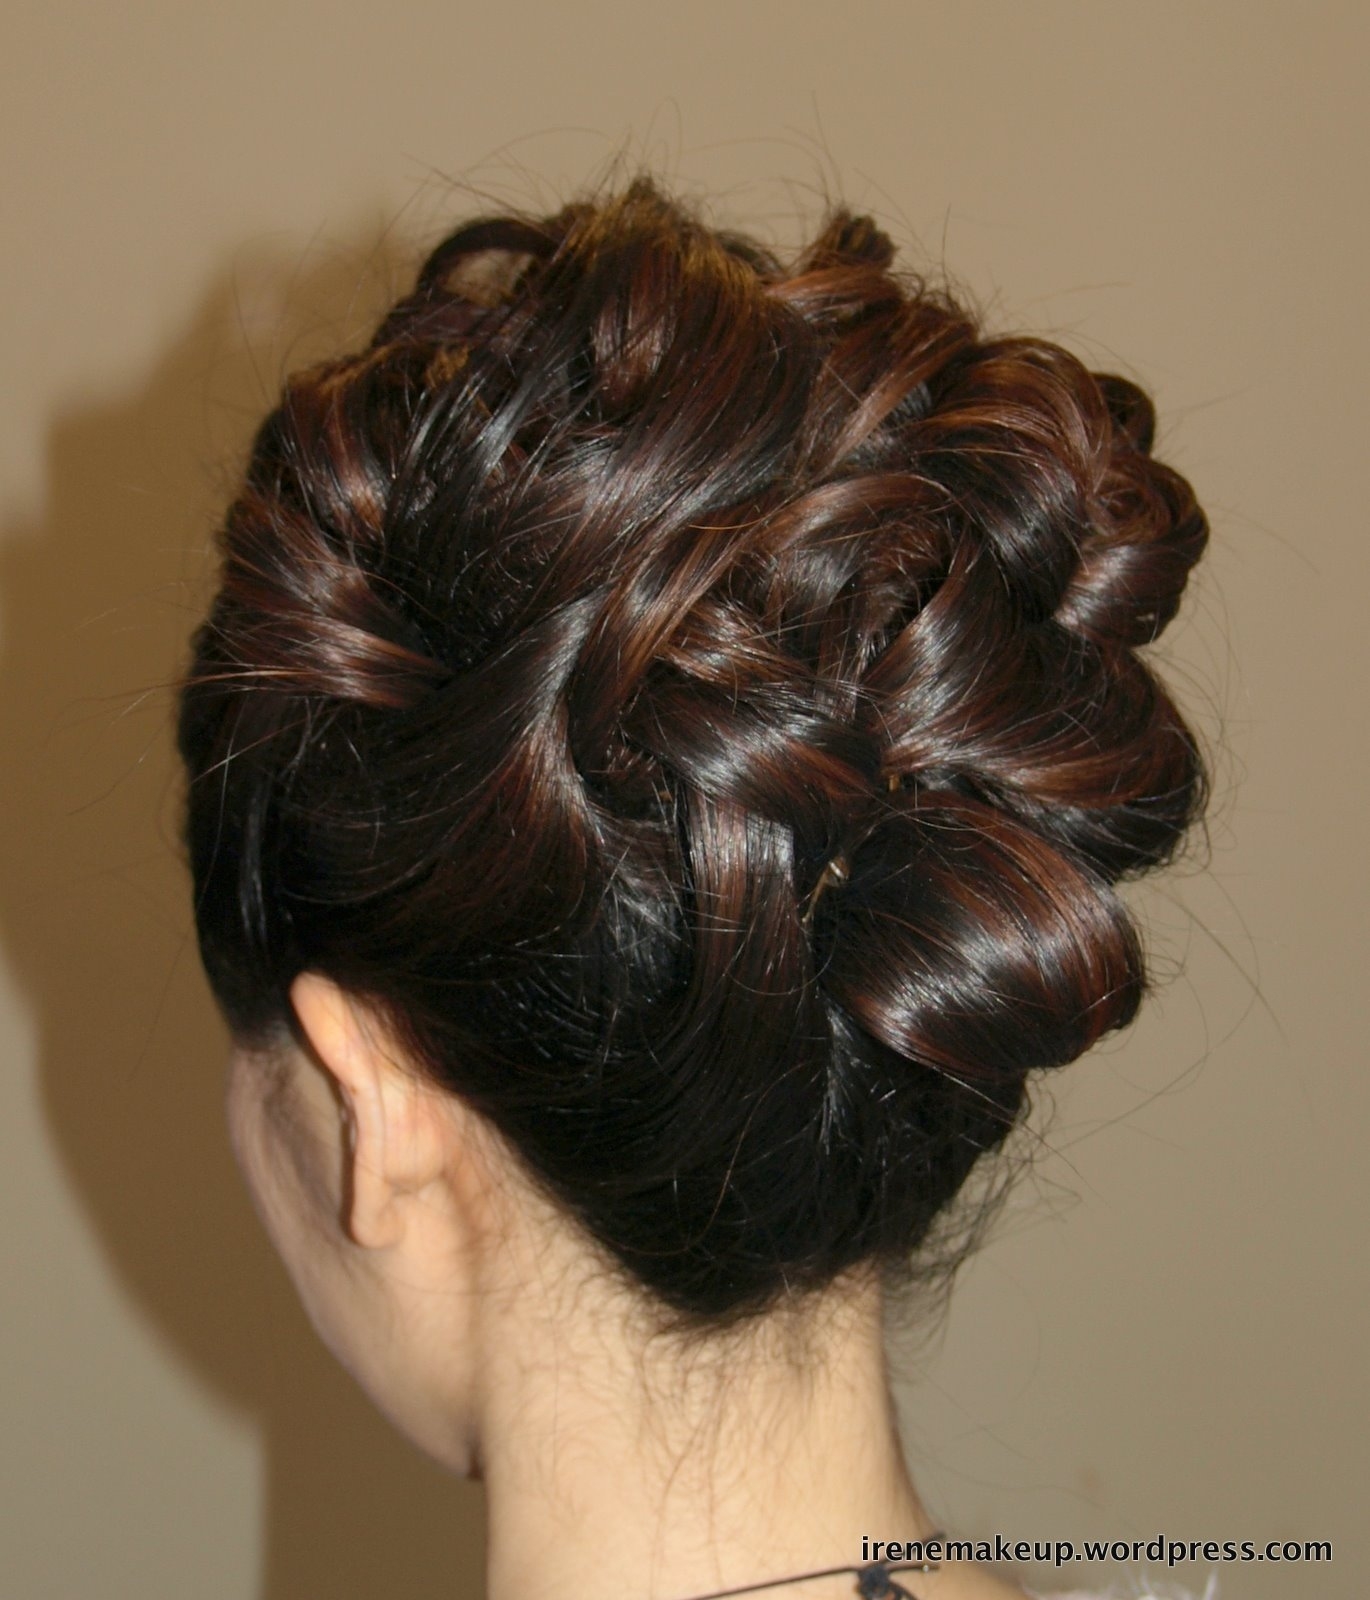 Chinese Bridal Hairstyles- Classic Sleek Updo 新娘盘头发型 | 伦敦 regarding Best Asian Wedding Updo Hairstyles